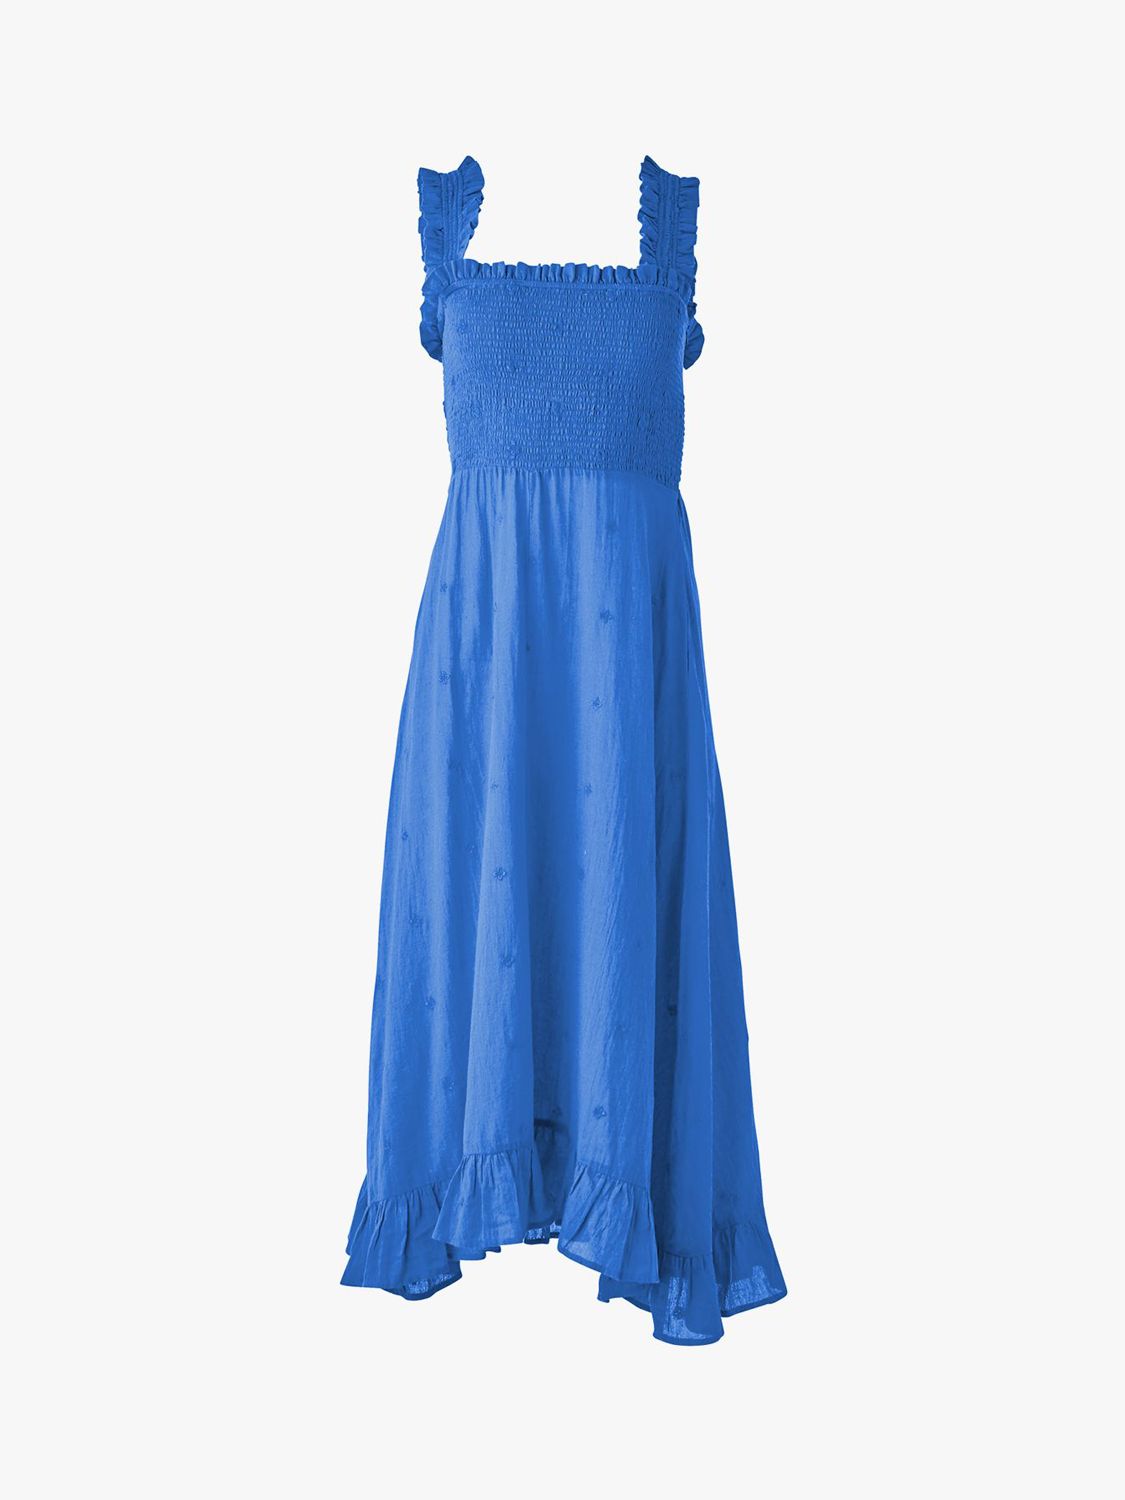 Aspiga Rhianna Cotton Embroidered Sleeveless Midi Dress, Marina Blue, XS